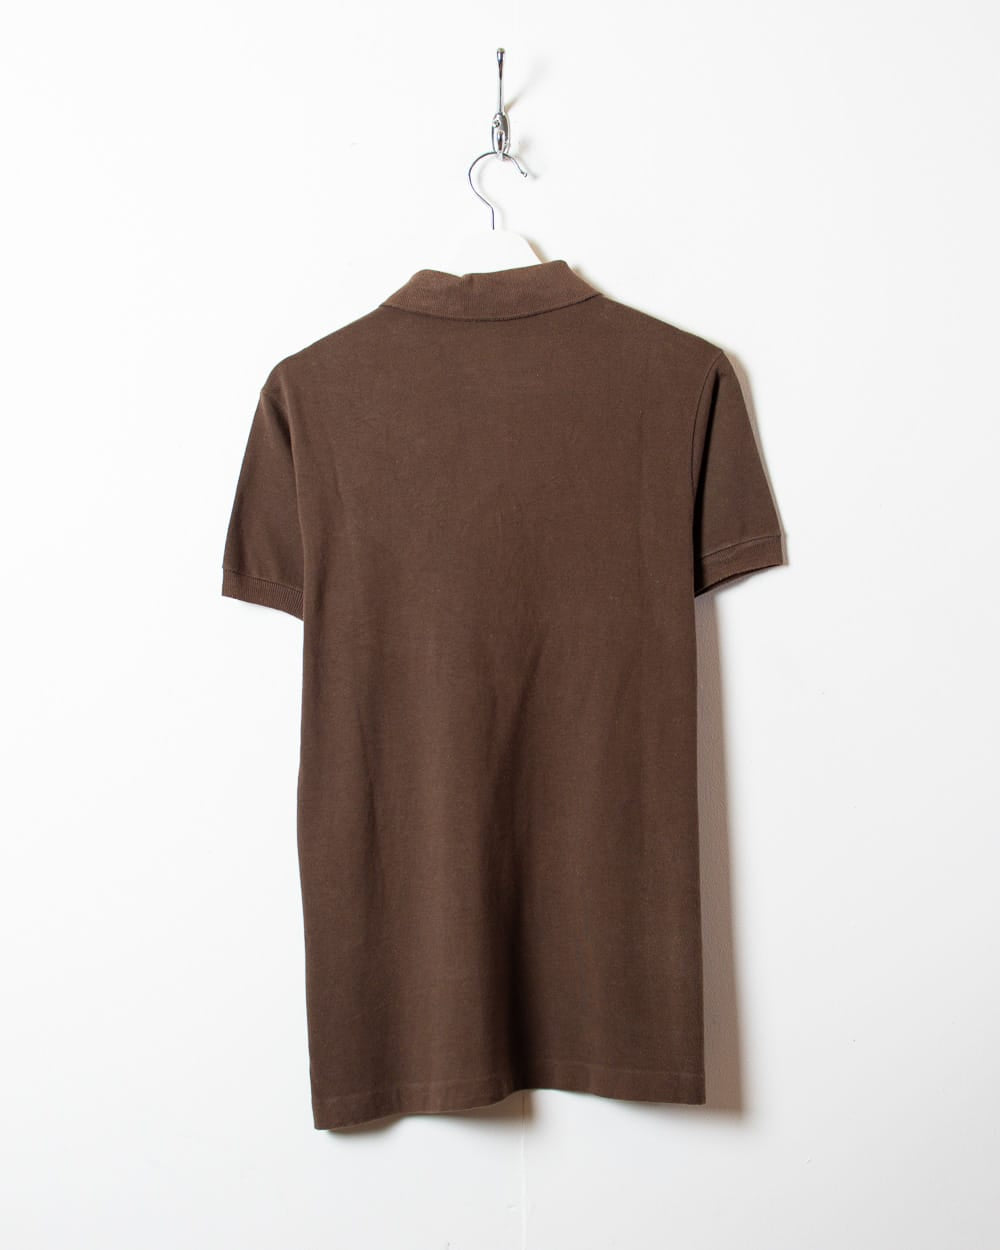 Brown Chemise Lacoste Polo Shirt - Medium